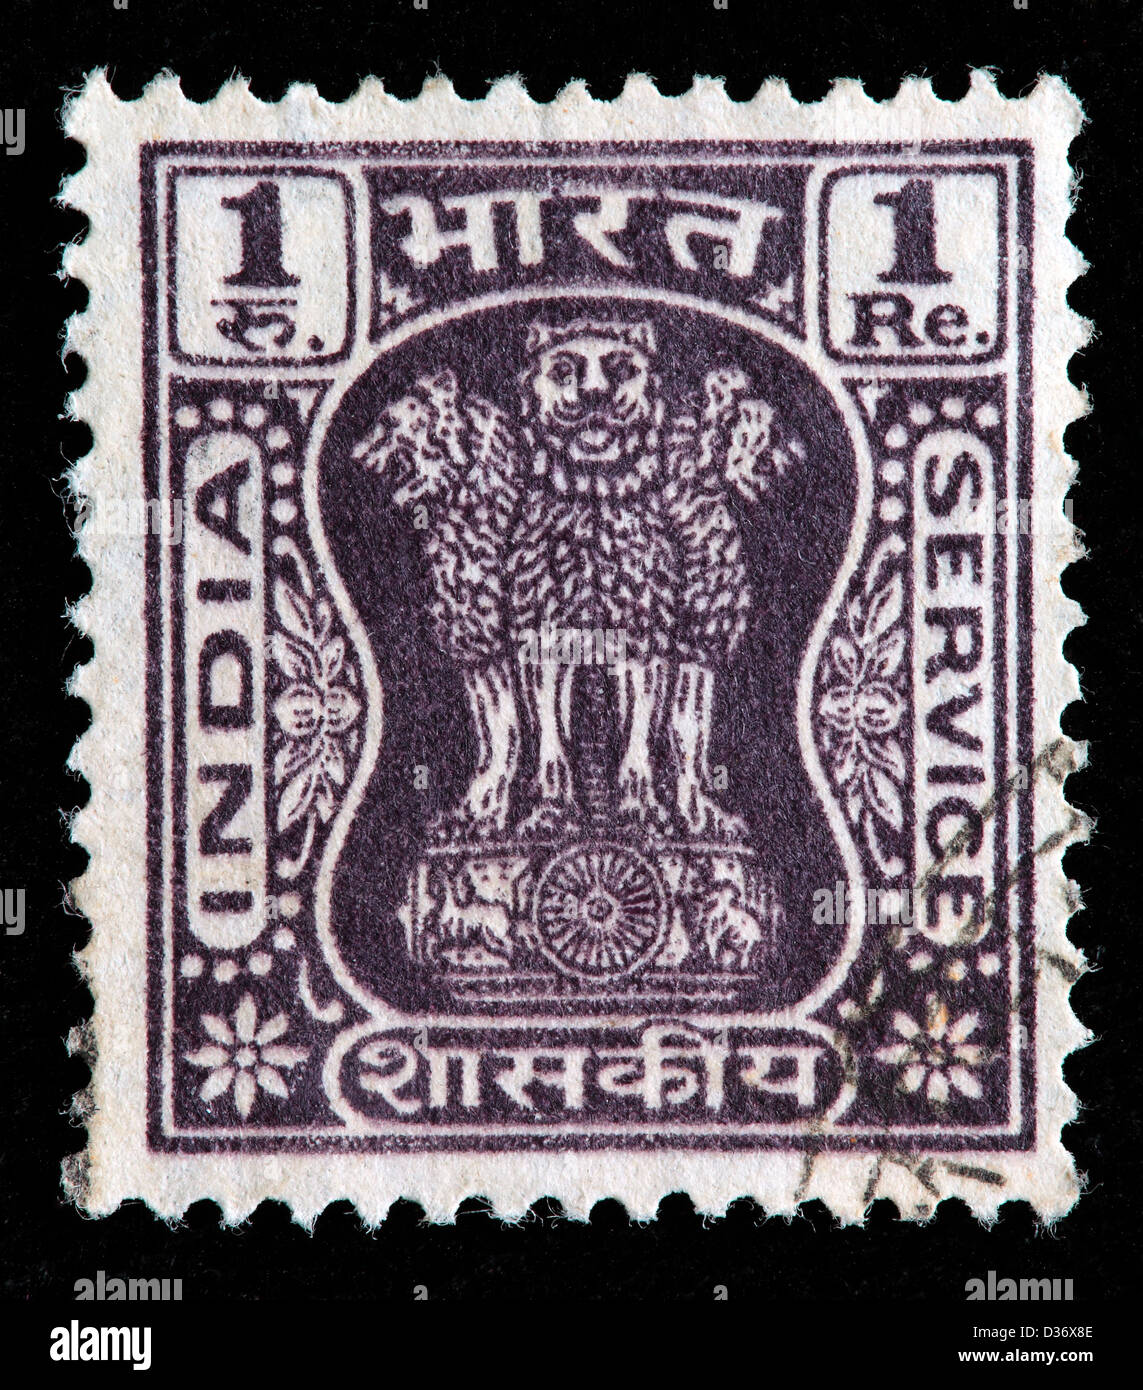 Capital of Asoka Pillar, postage stamp, India, 1967 Stock Photo